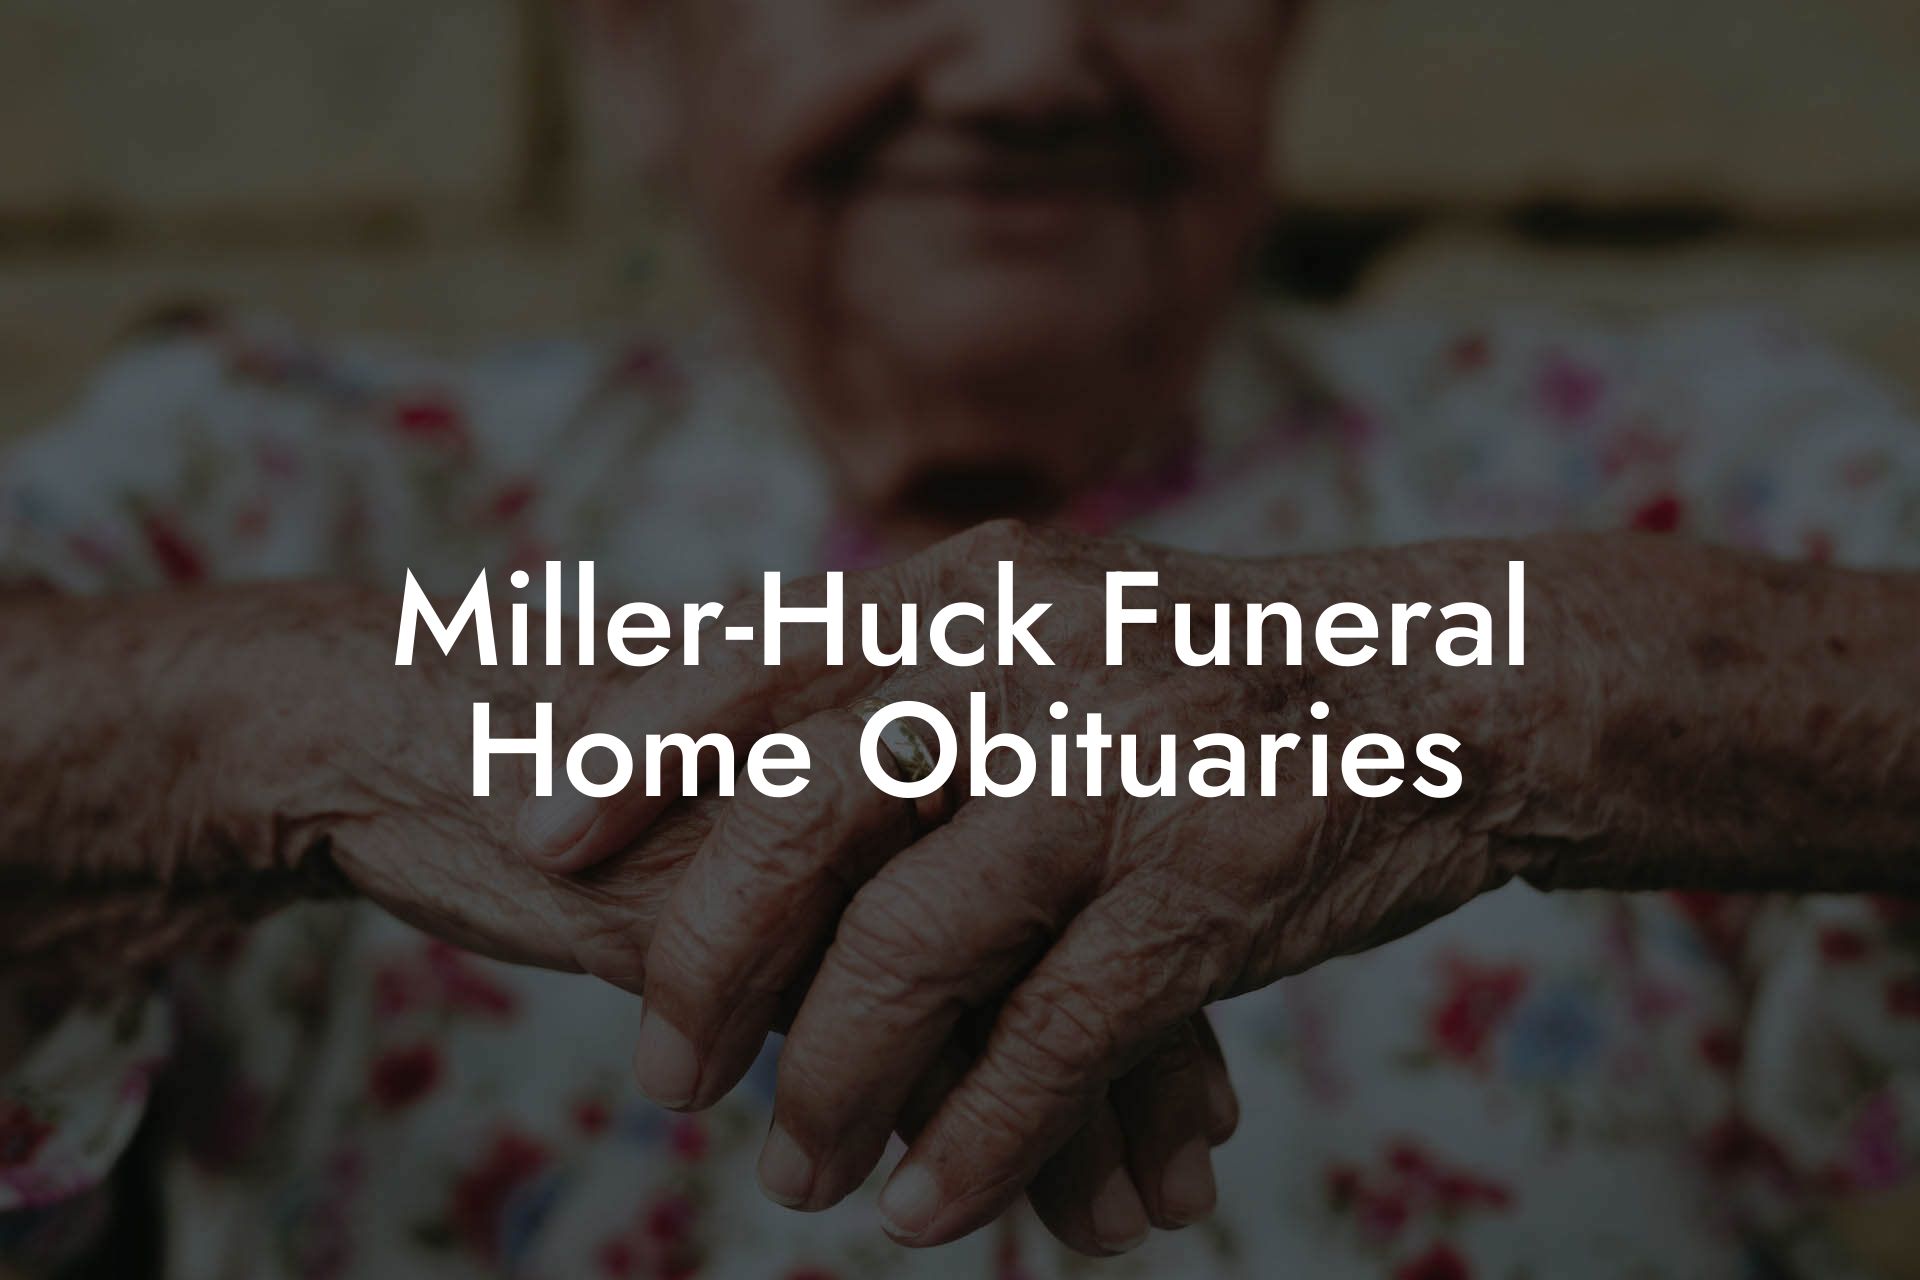 Miller-Huck Funeral Home Obituaries